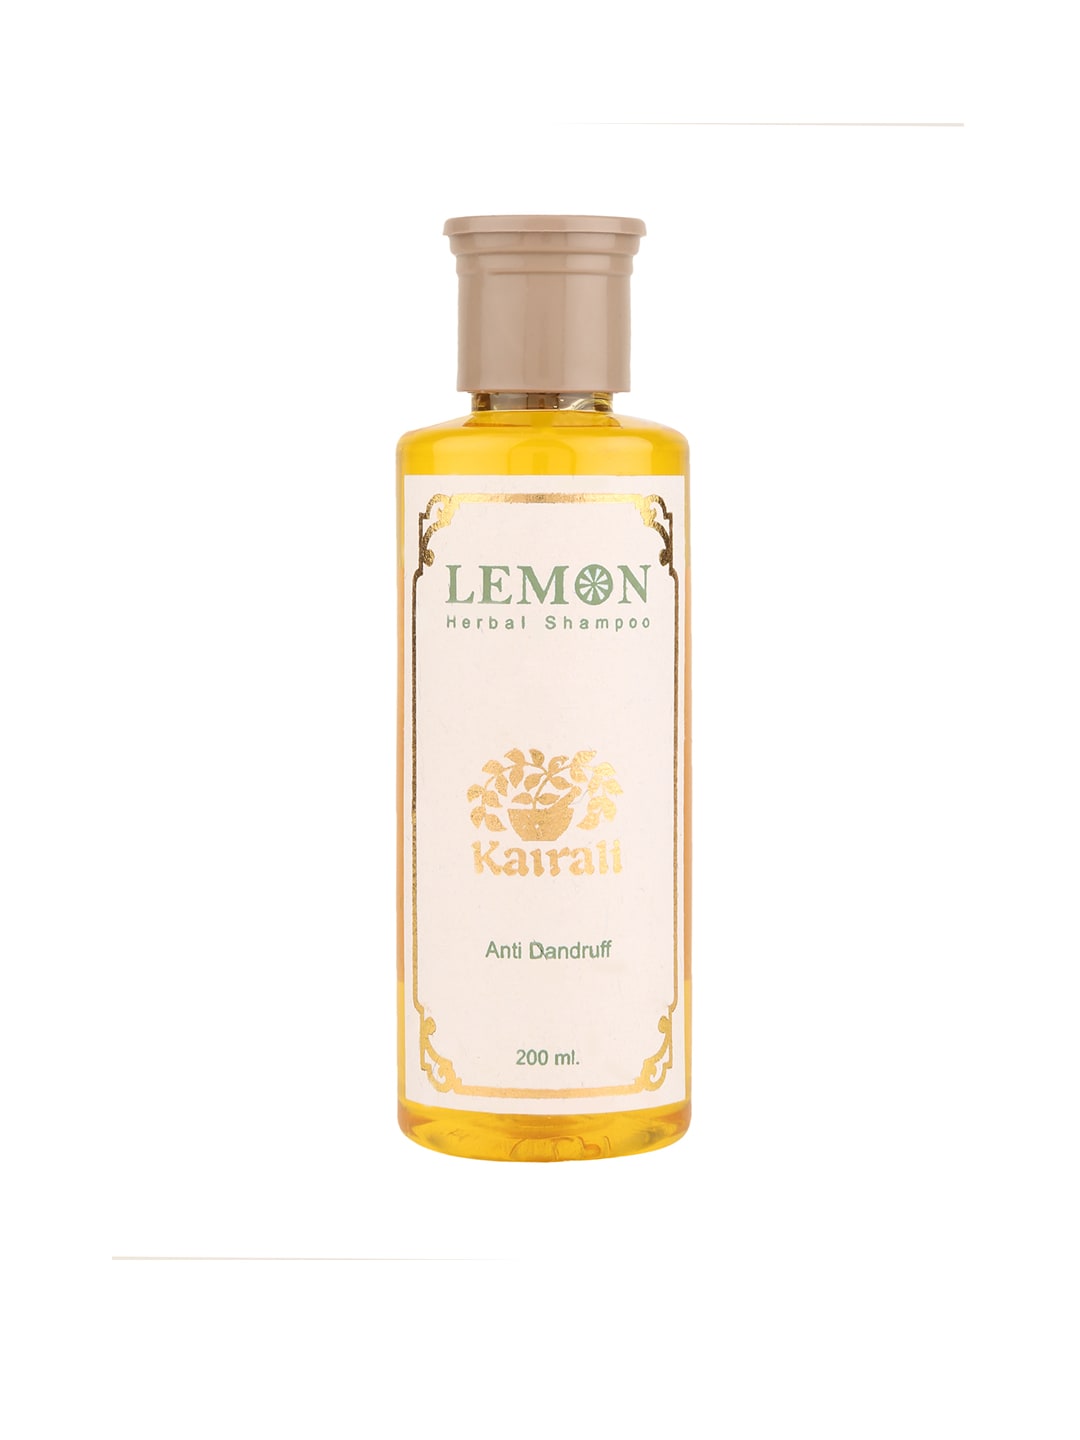 Kairali Lemon Herbal Shampoo 200ml Price in India